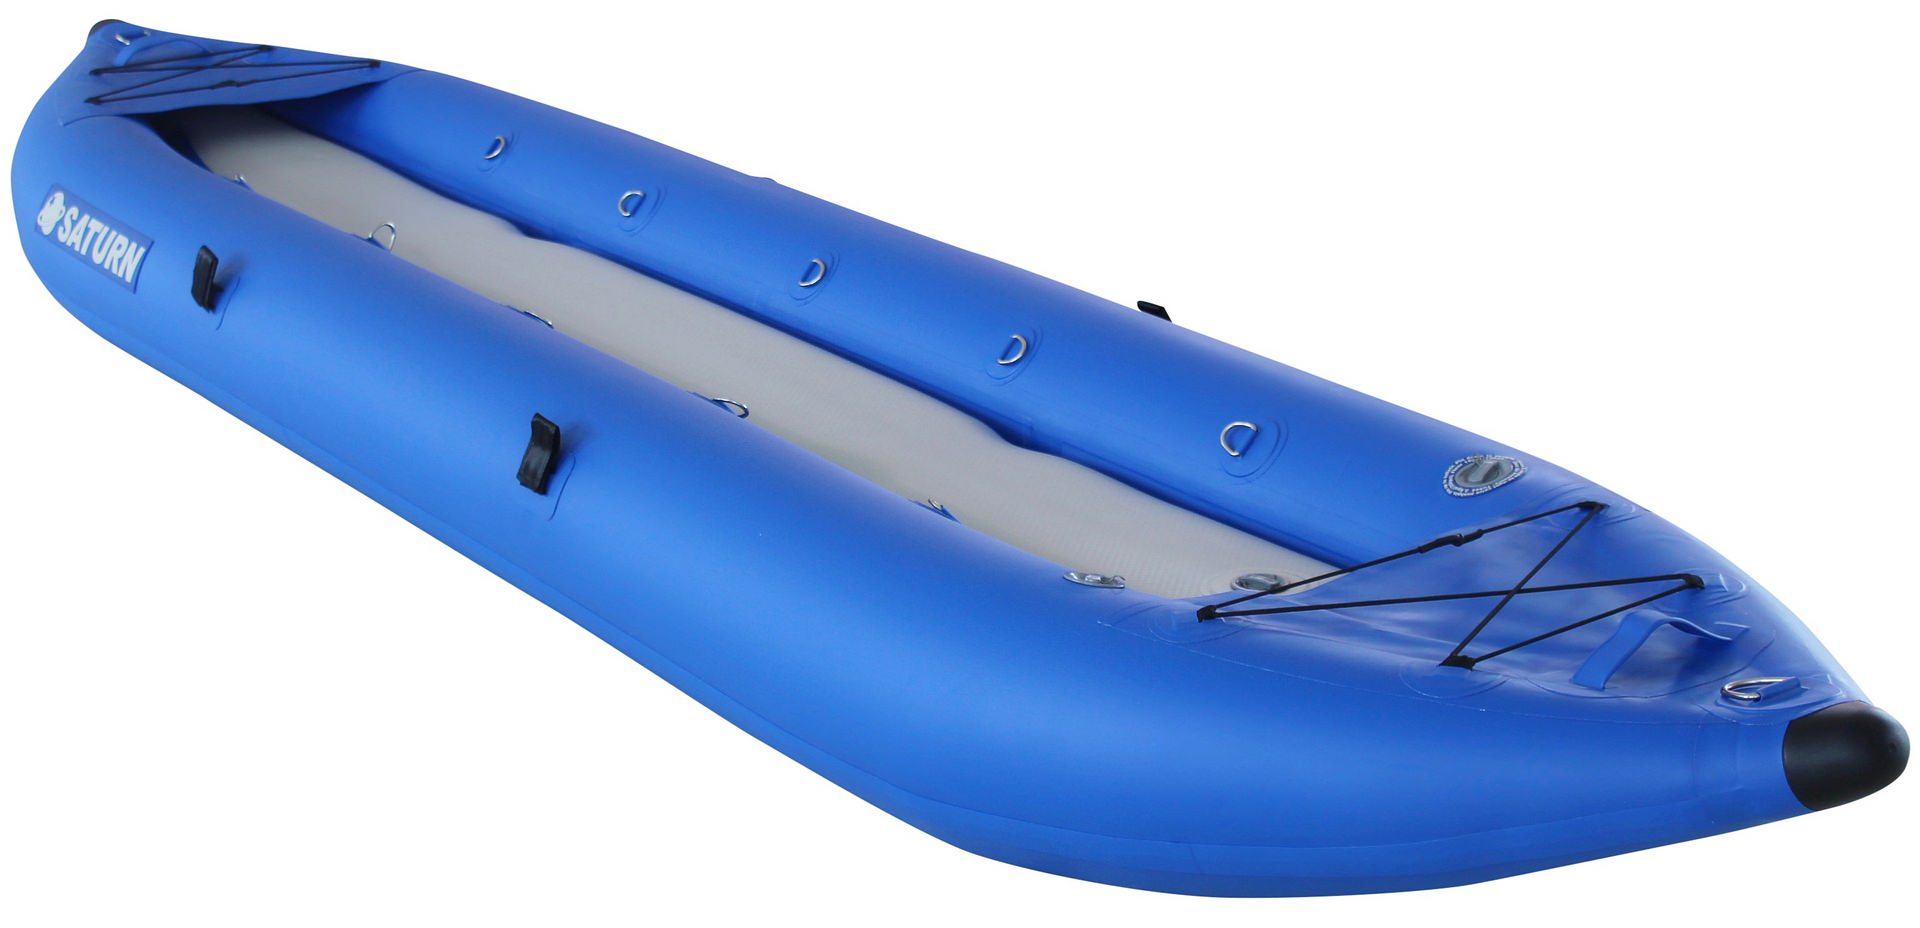 Free Shipping 14' Self Bailing Premium Ocean River Inflatable